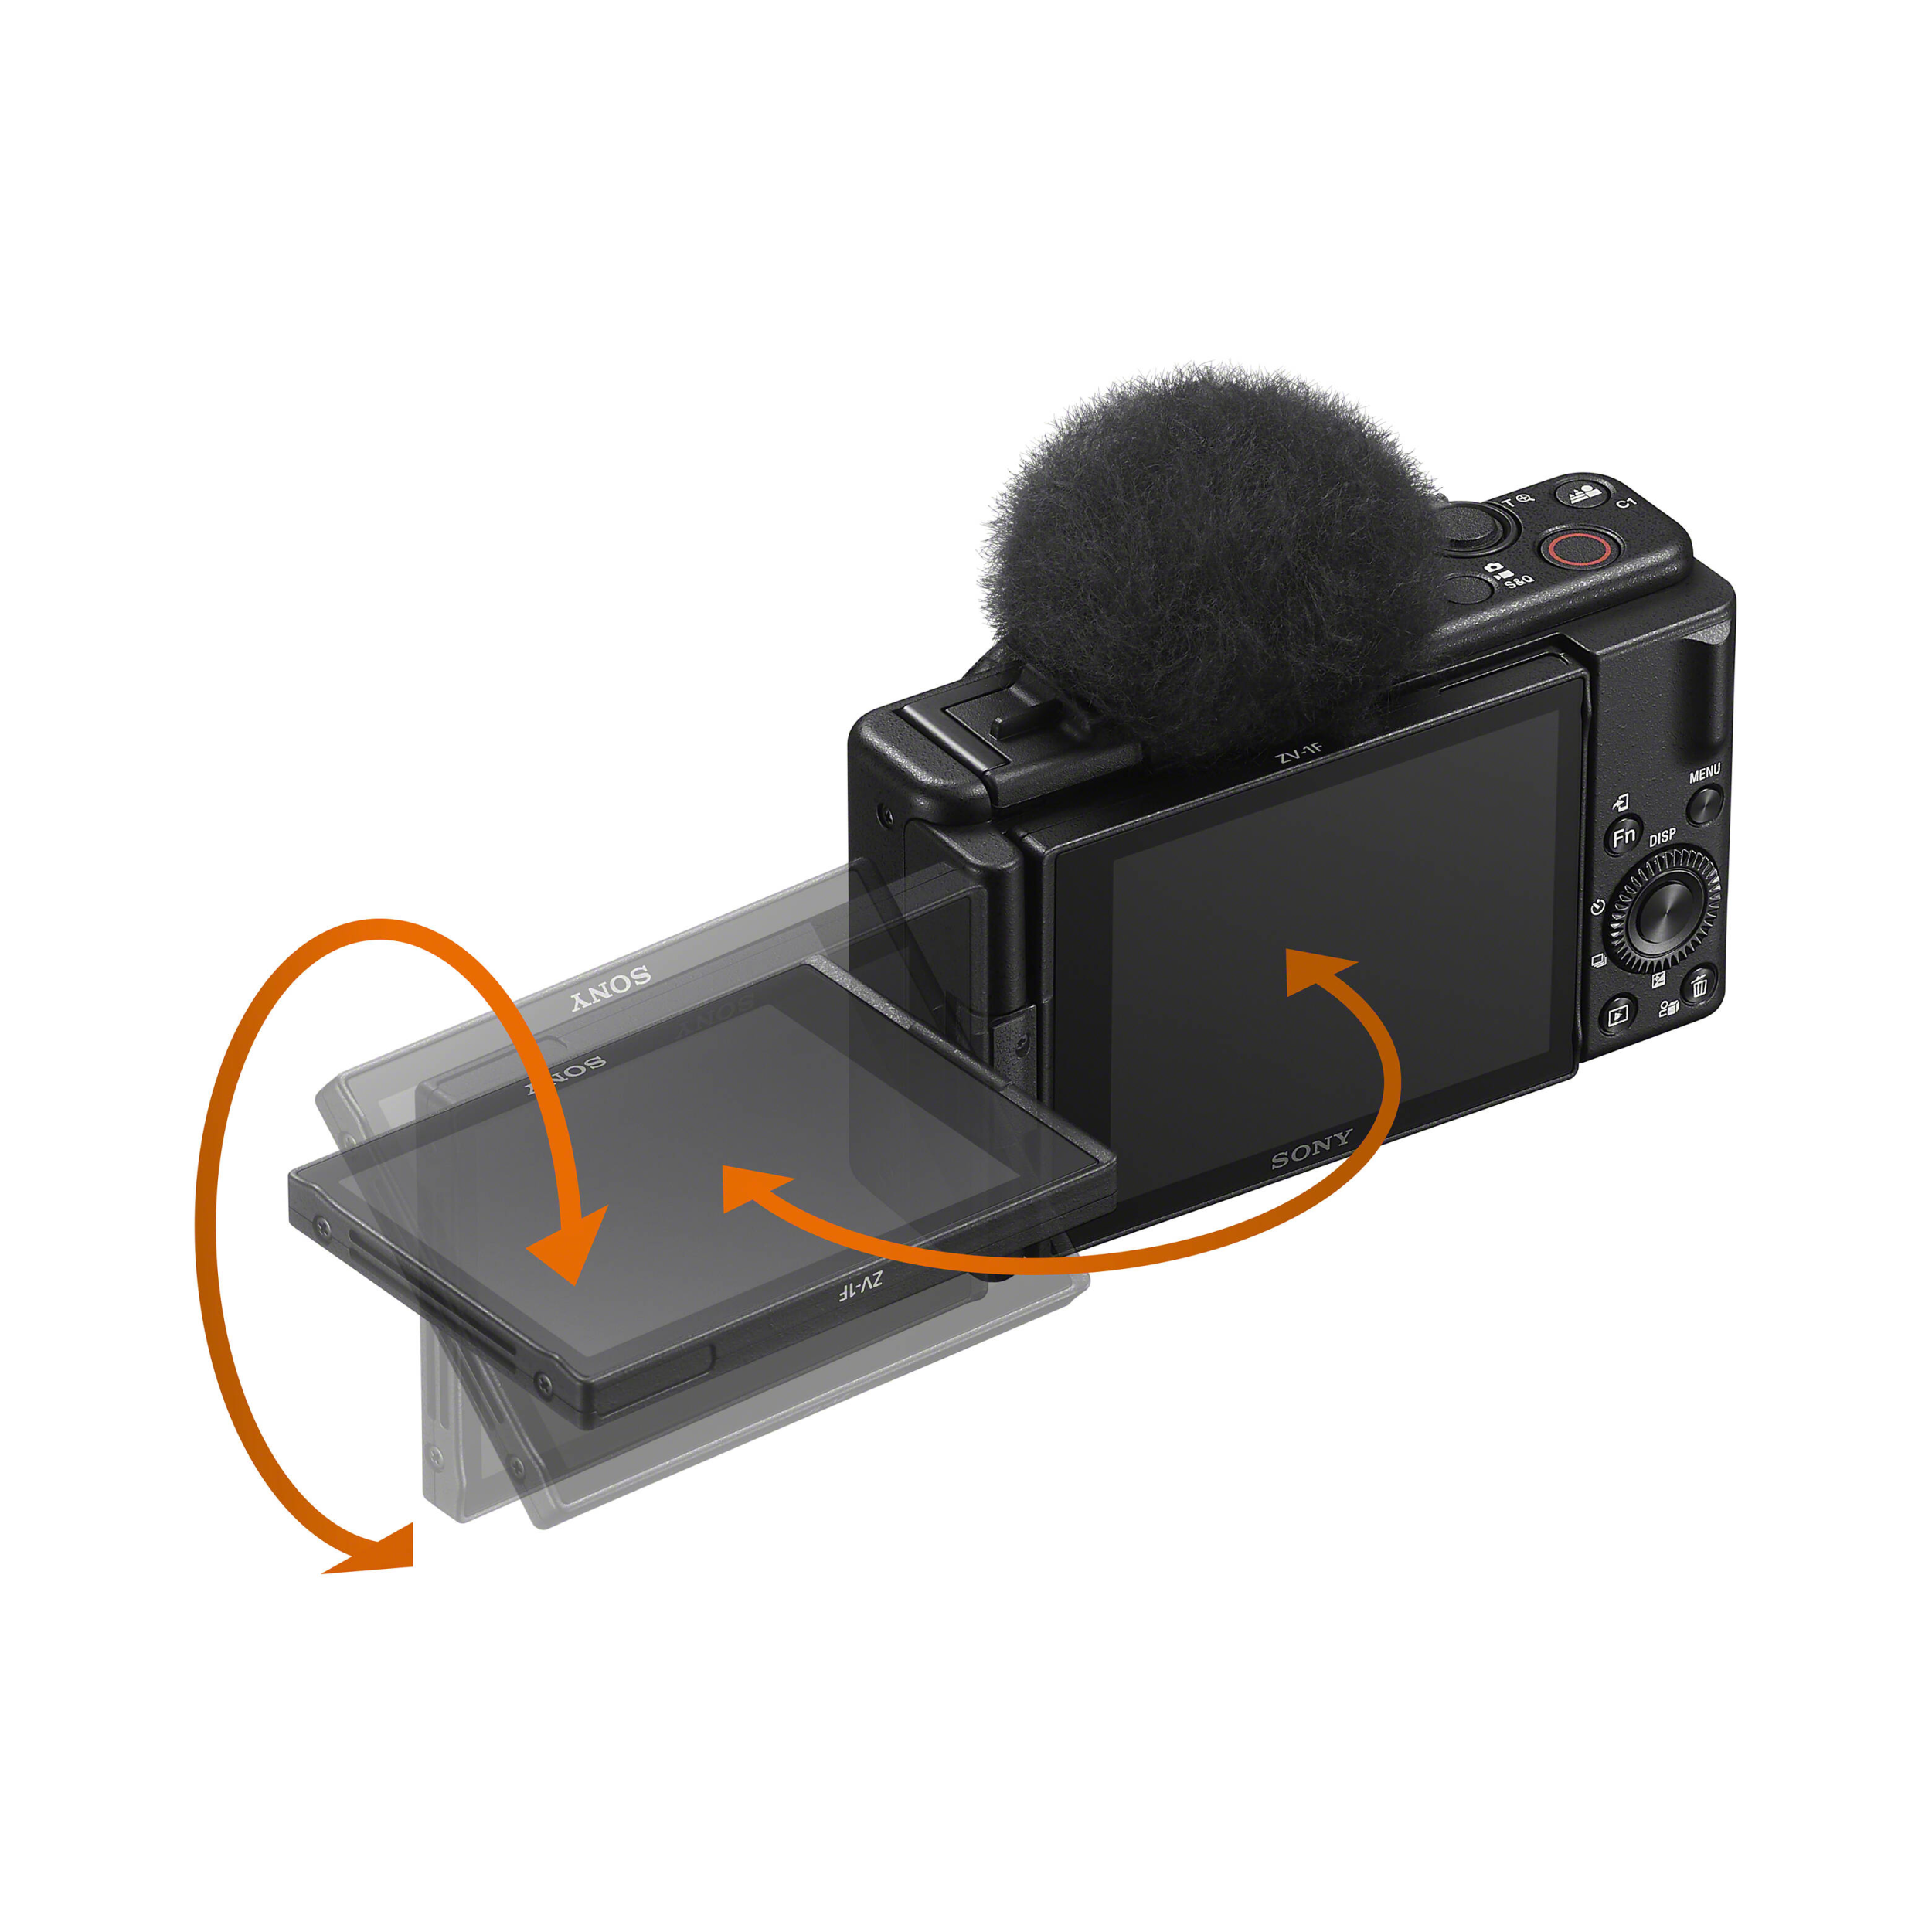 Caméra de vlogging Sony Zv-1f